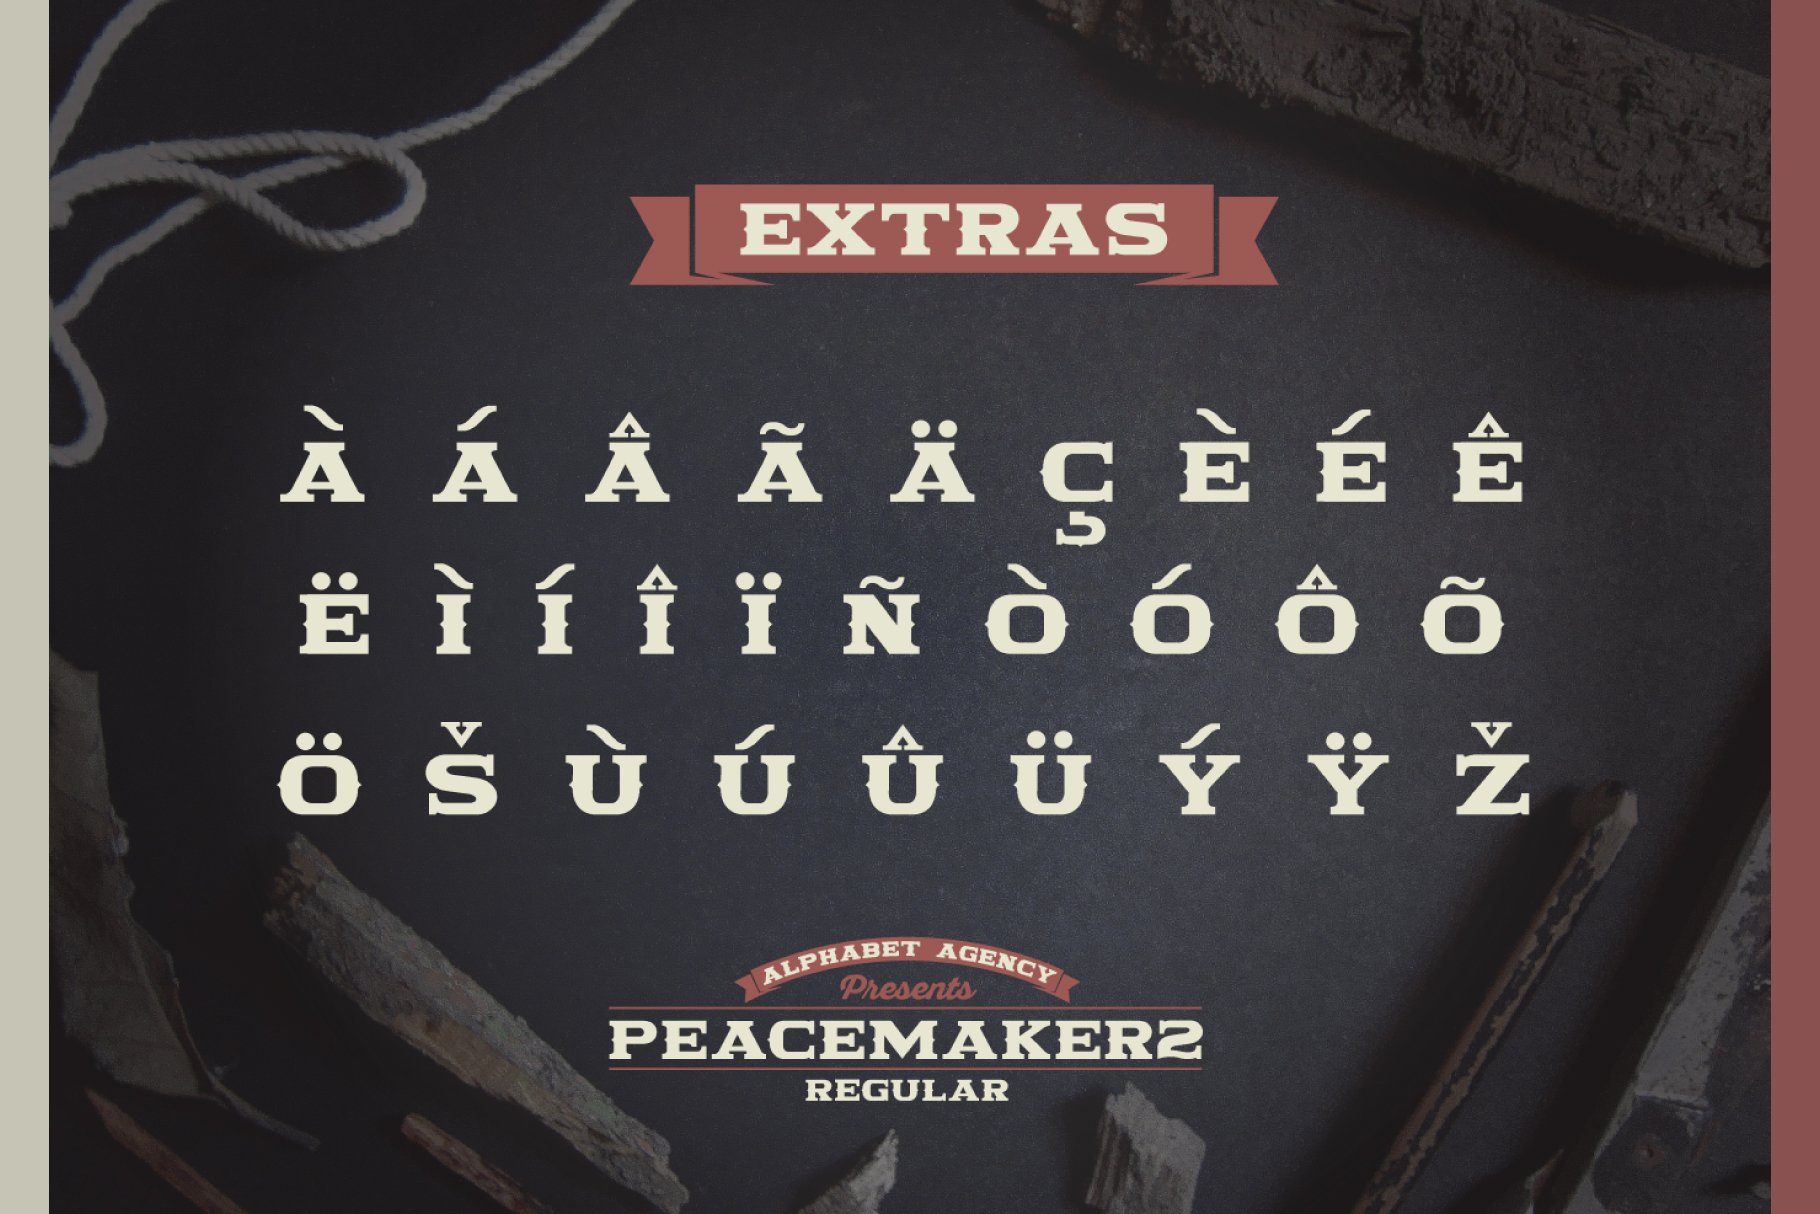 peacemaker2 regular extras2 1820x1214 233